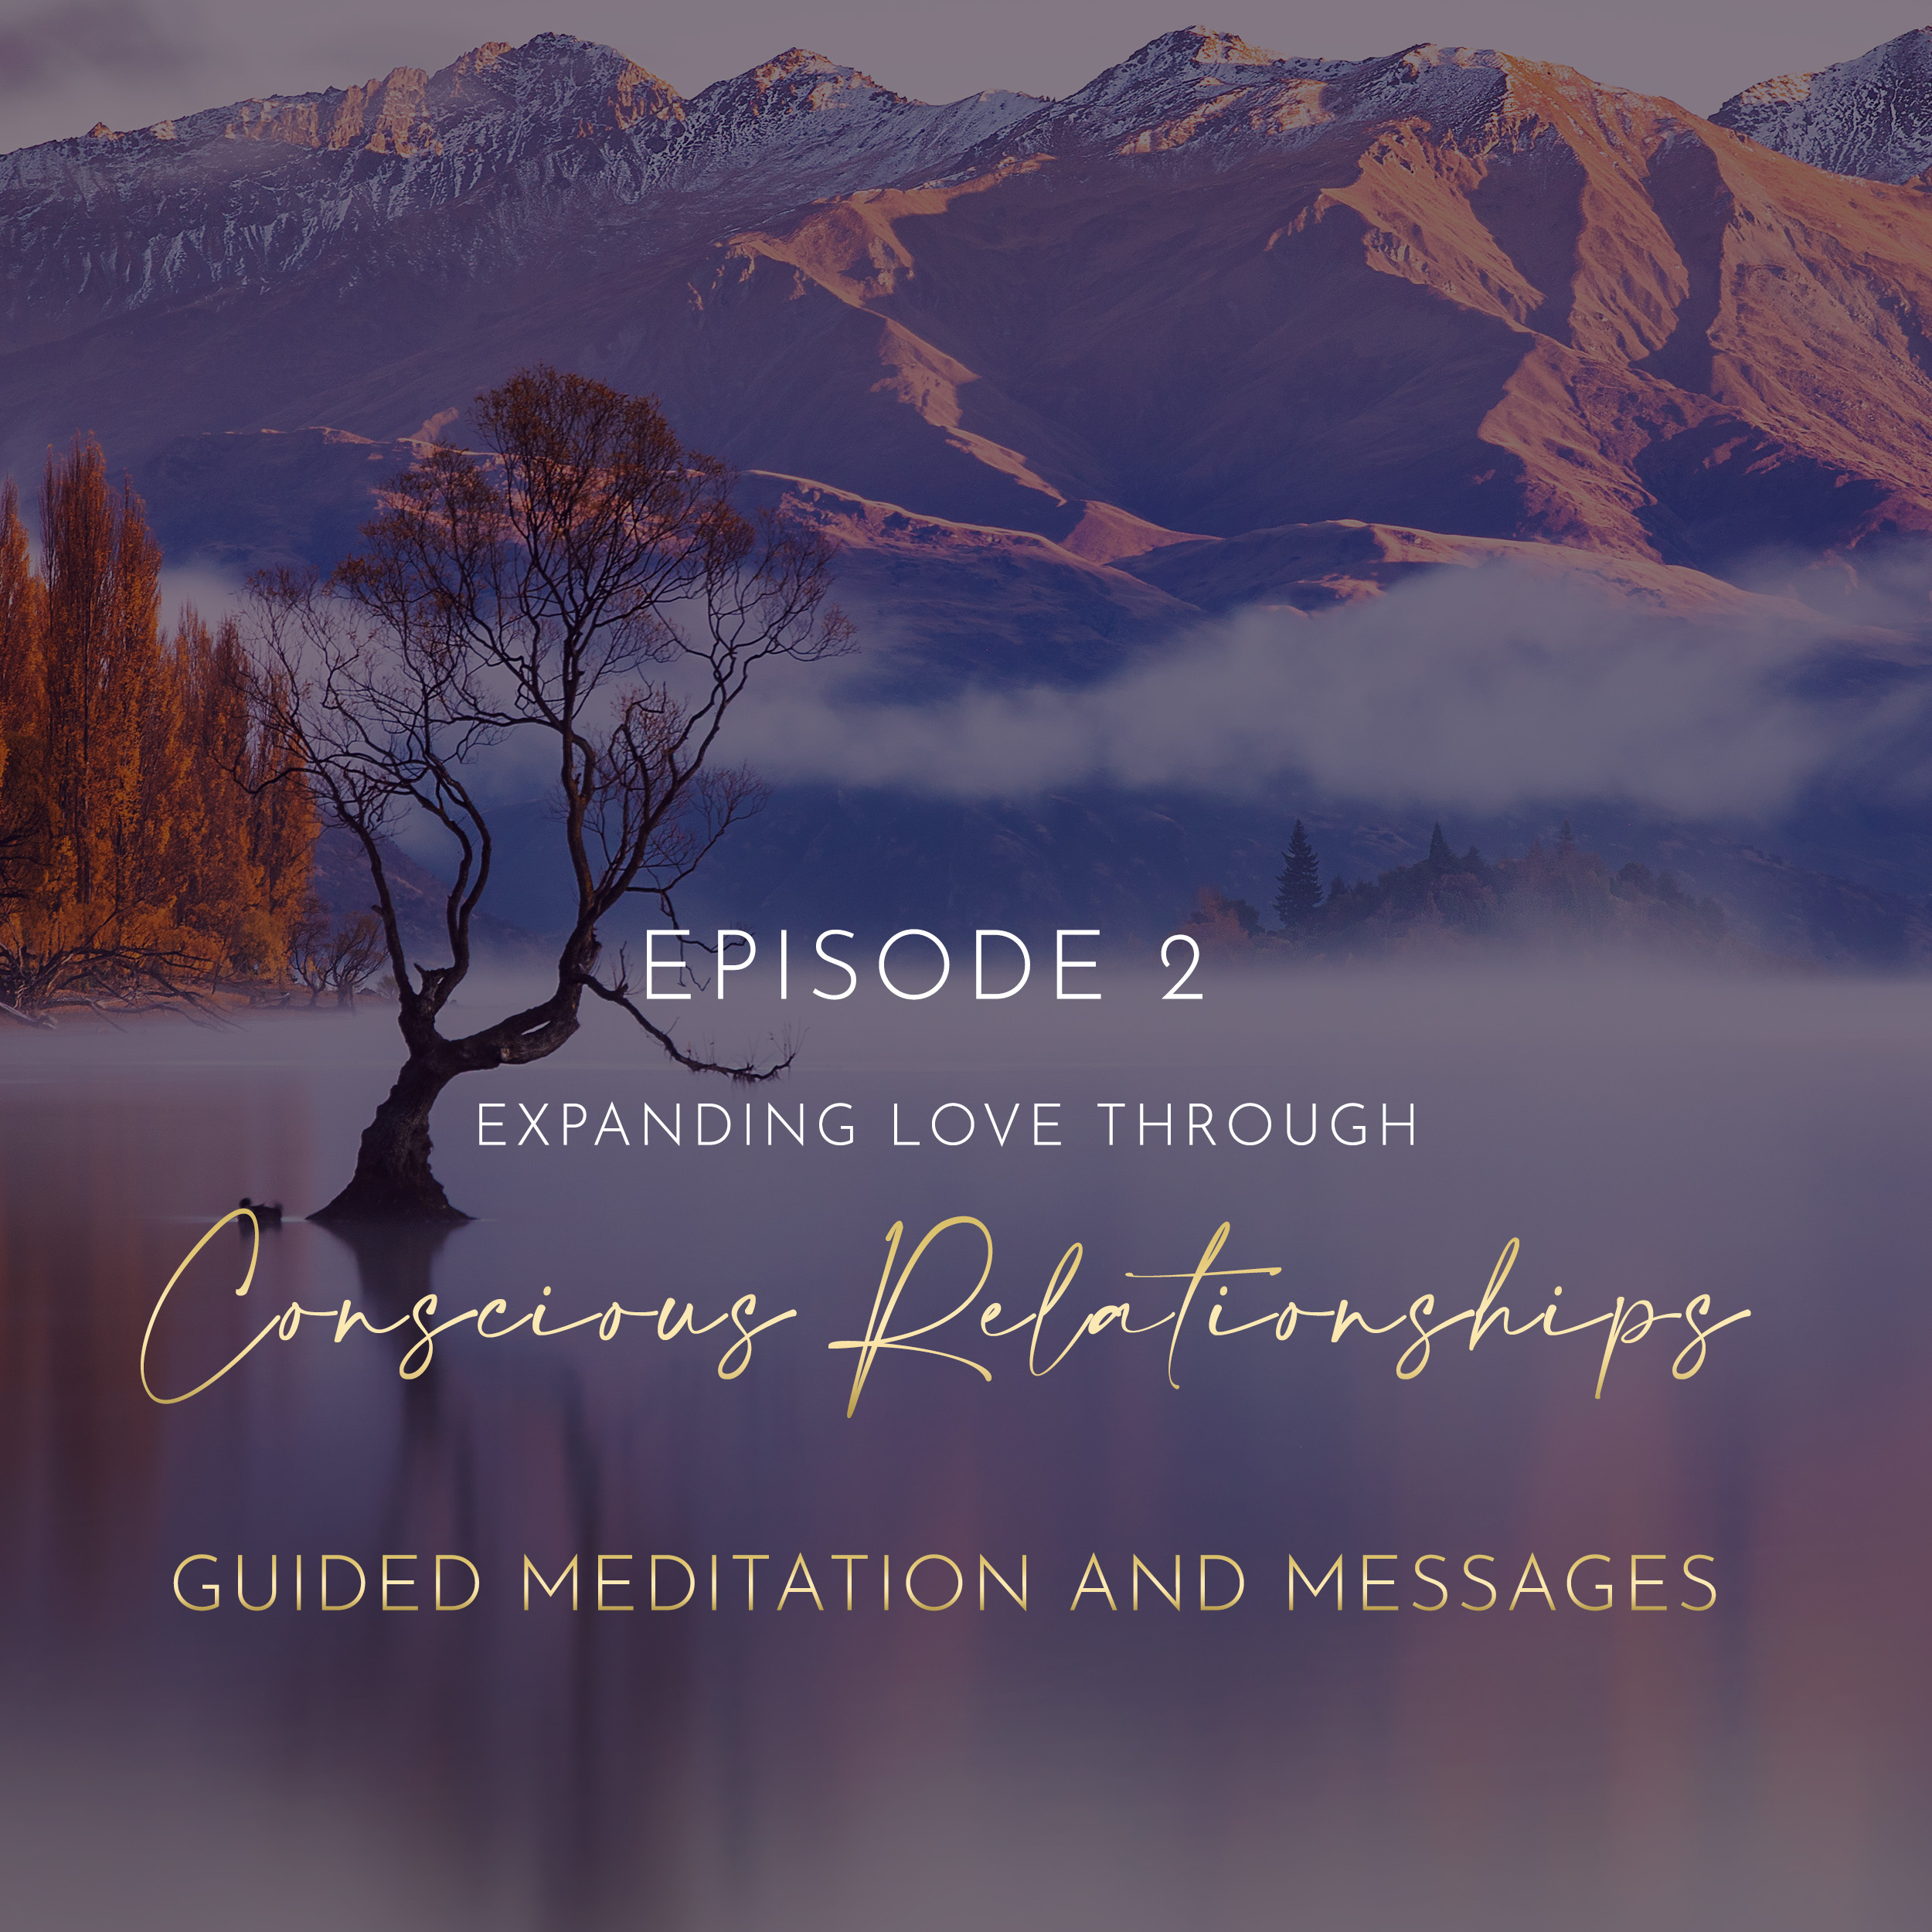 Episode 2: Expanding Love through Conscious Relationships